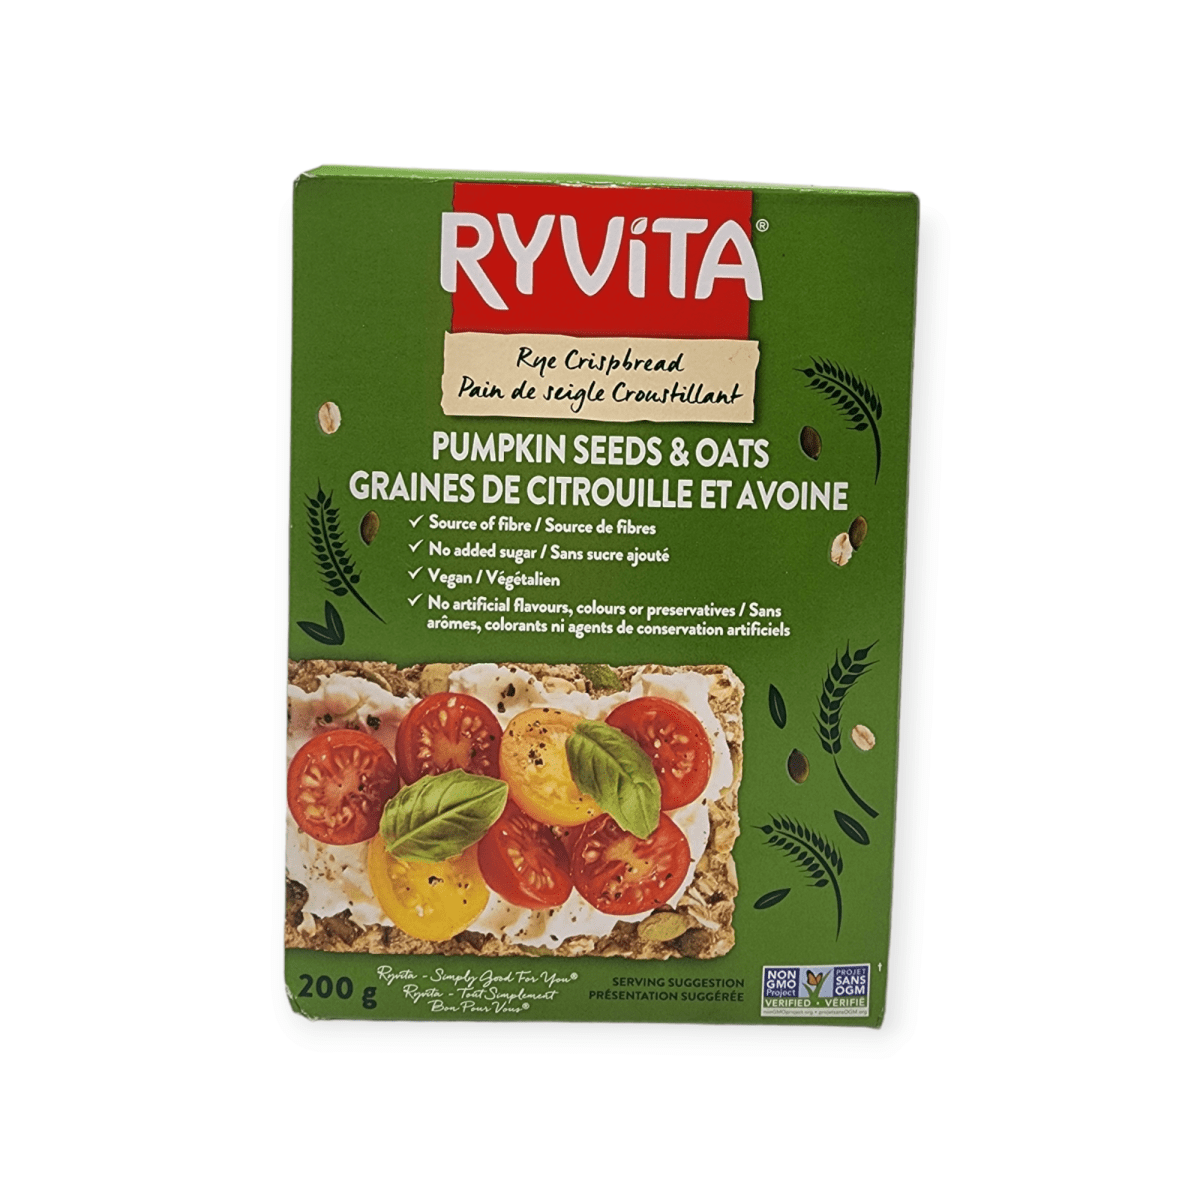 Ryvita Rye Crispbread Pumpkin Seeds & Oats (200g)